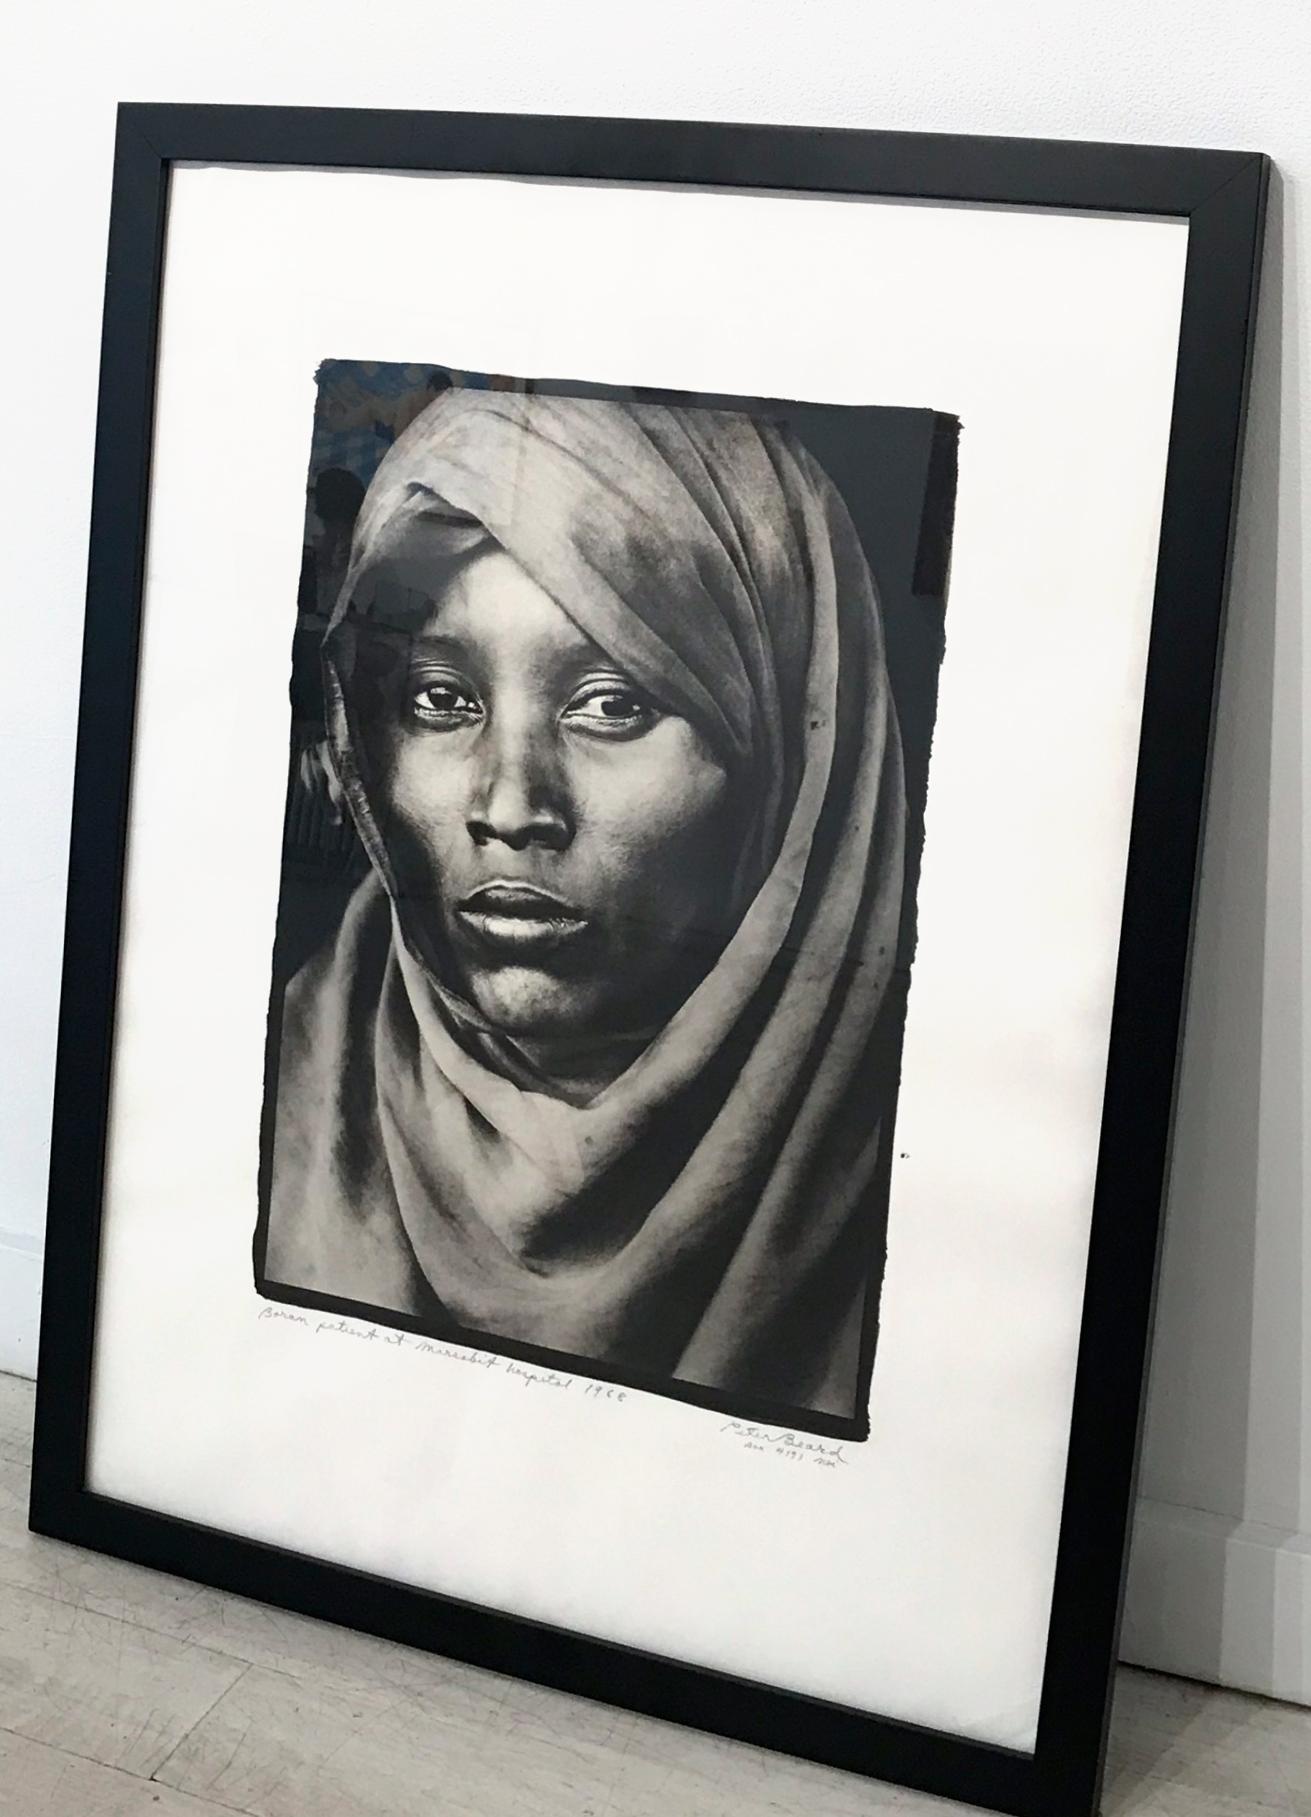 Boran Woman at Marsabit Hospital, Platinum Print, Black & White, Signed, Framed - Photograph by Peter Beard